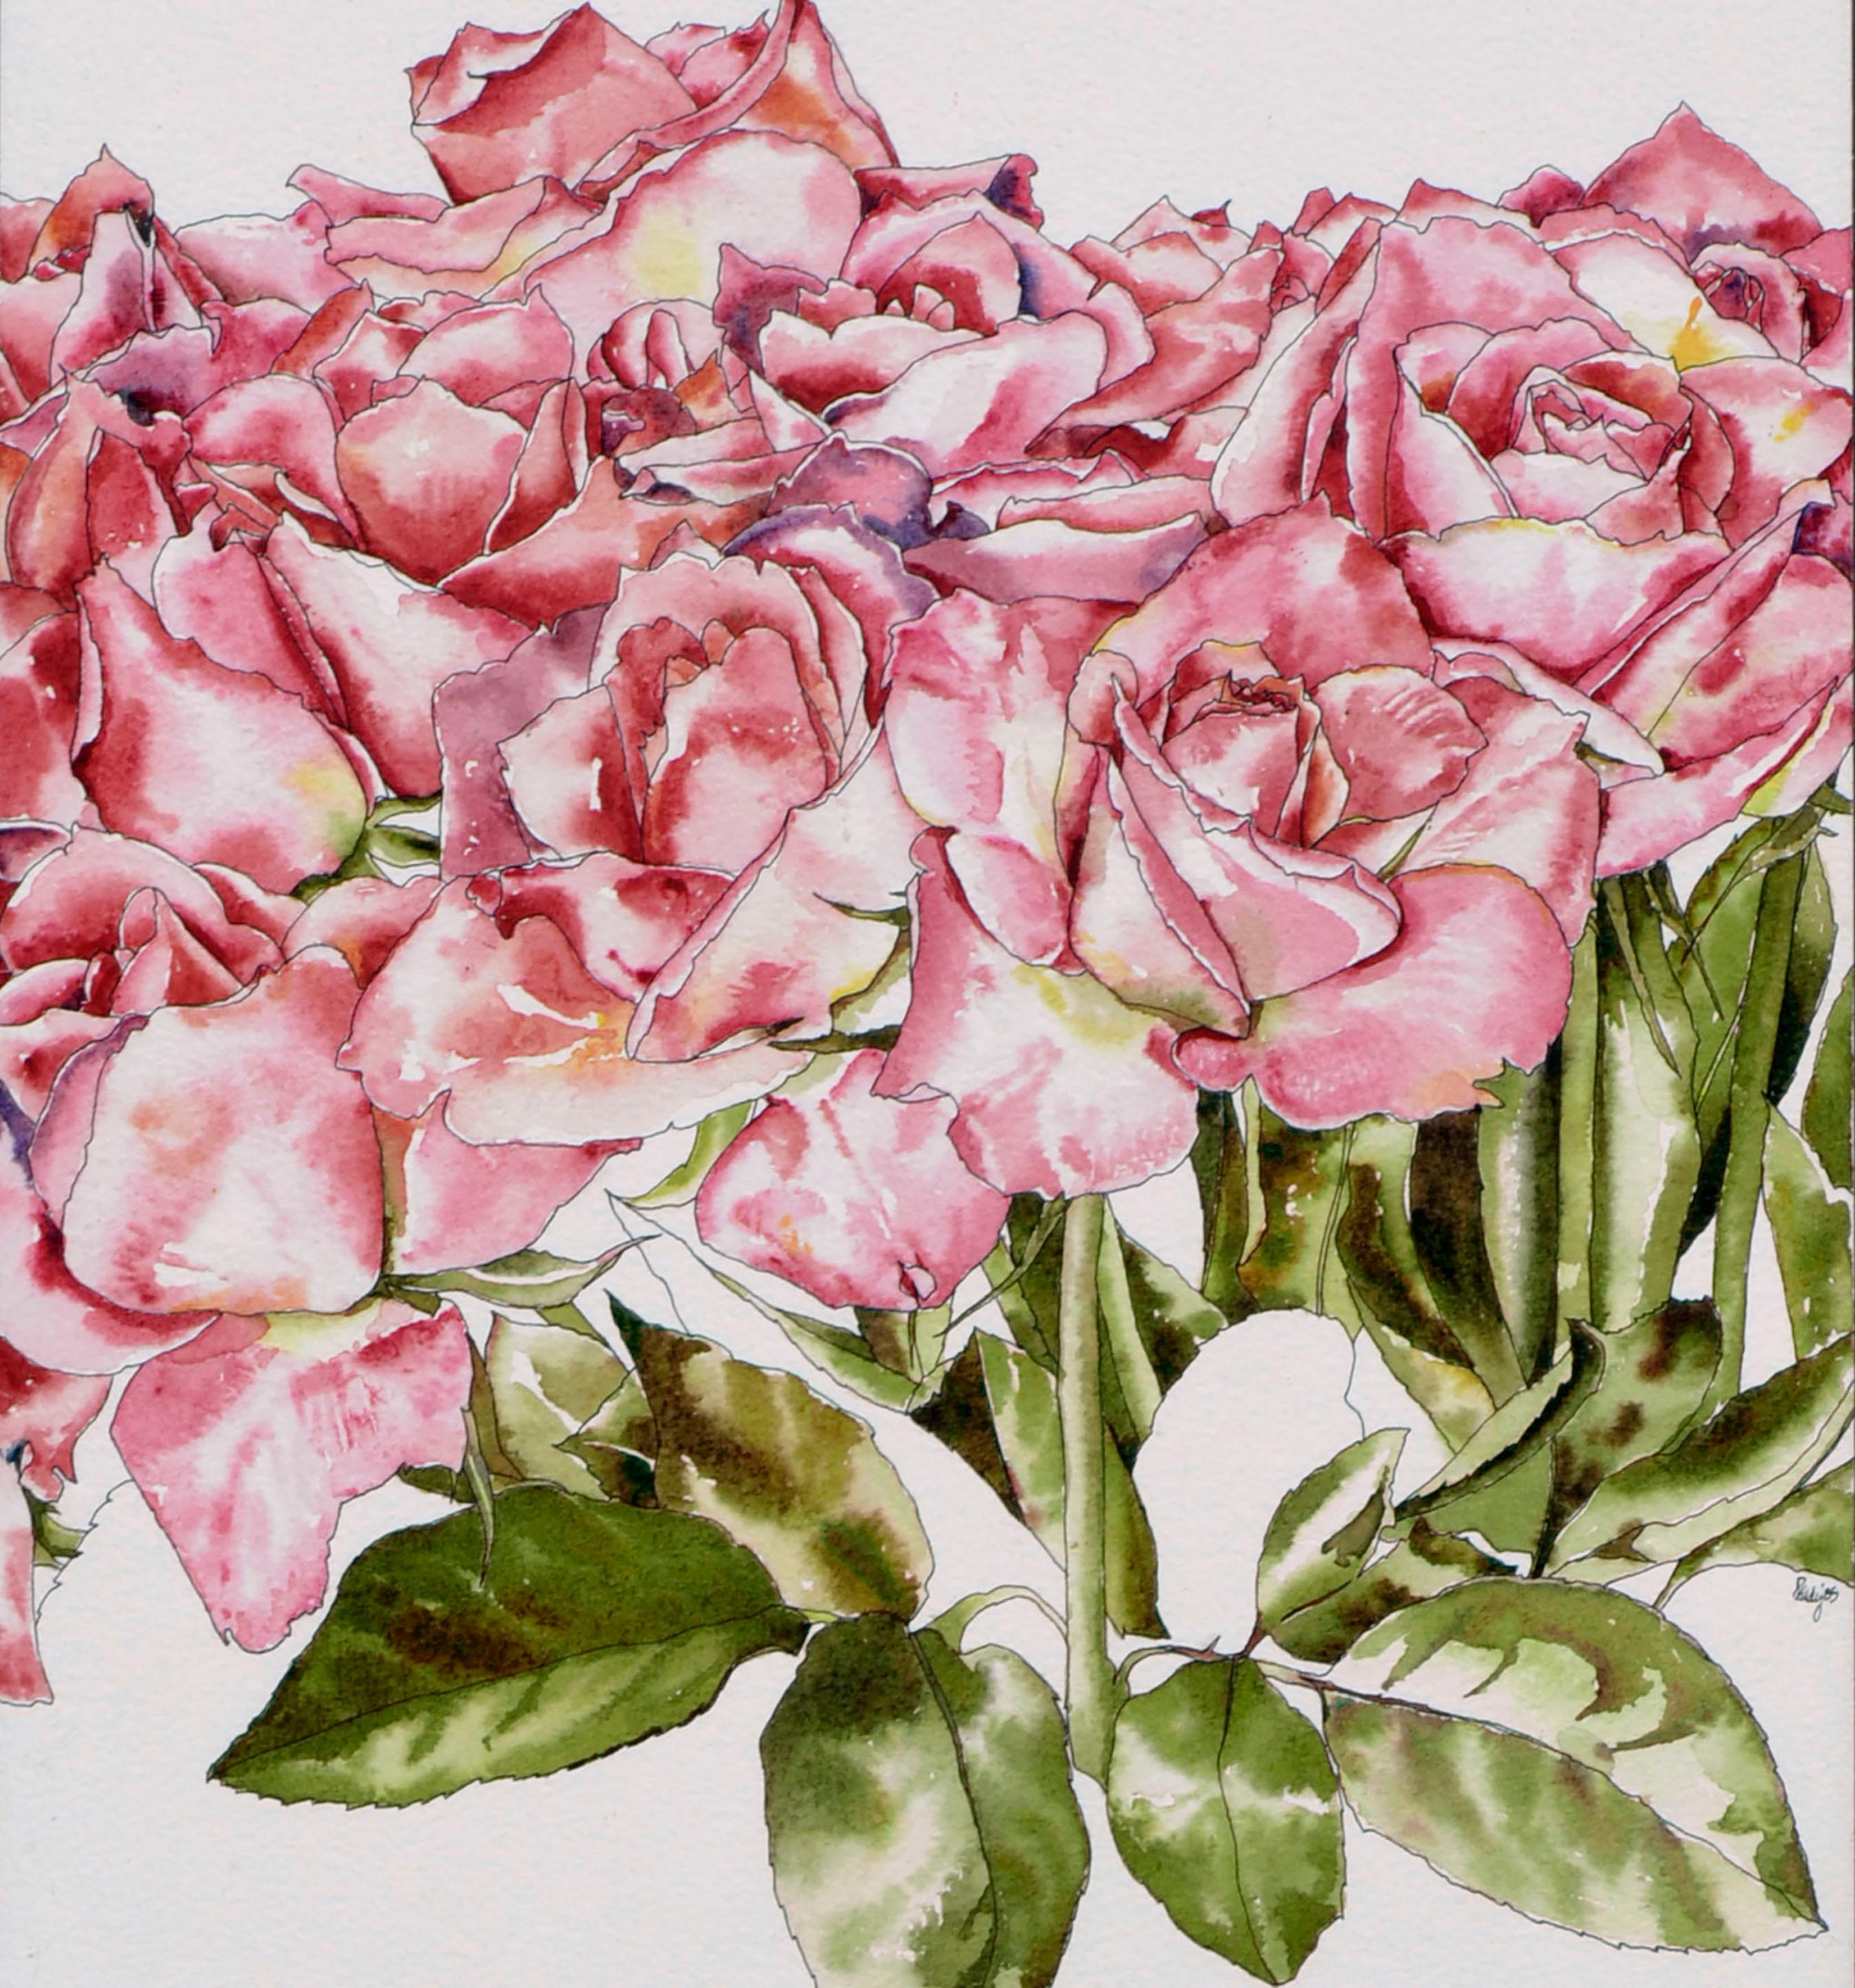 pink rose study